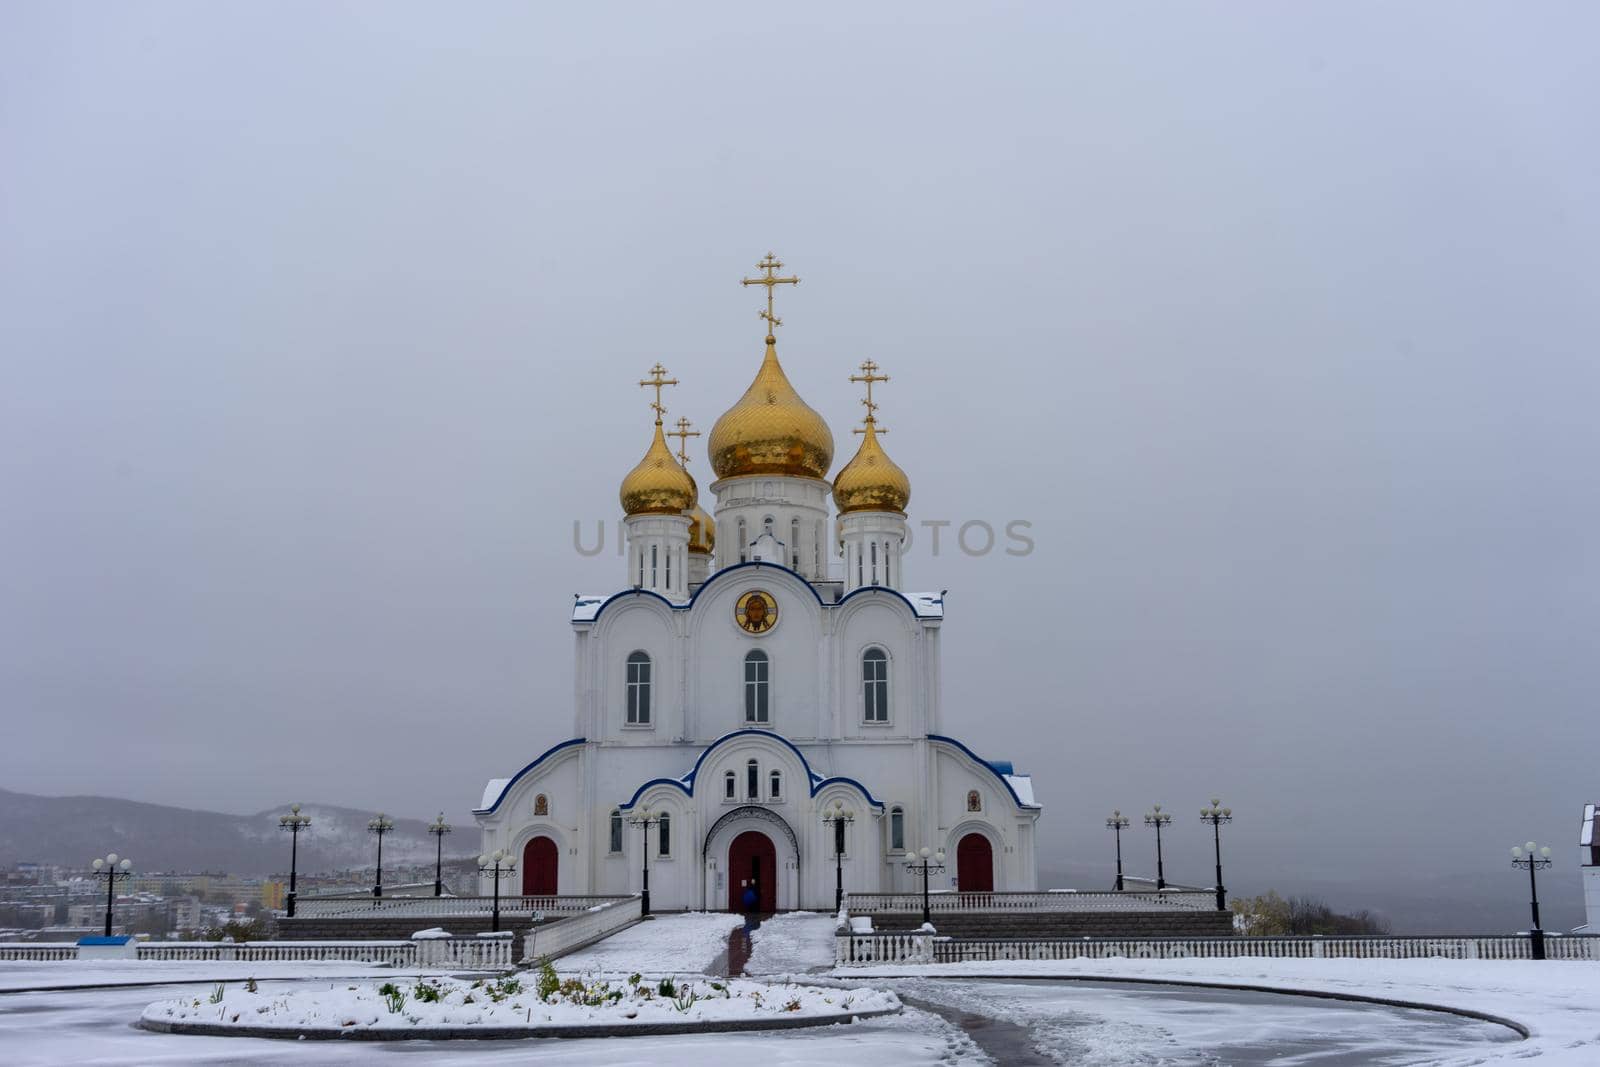 Petropavlovsk-Kamchatsky, Russia. the Church of St. Nicholas against a white snowy sky.